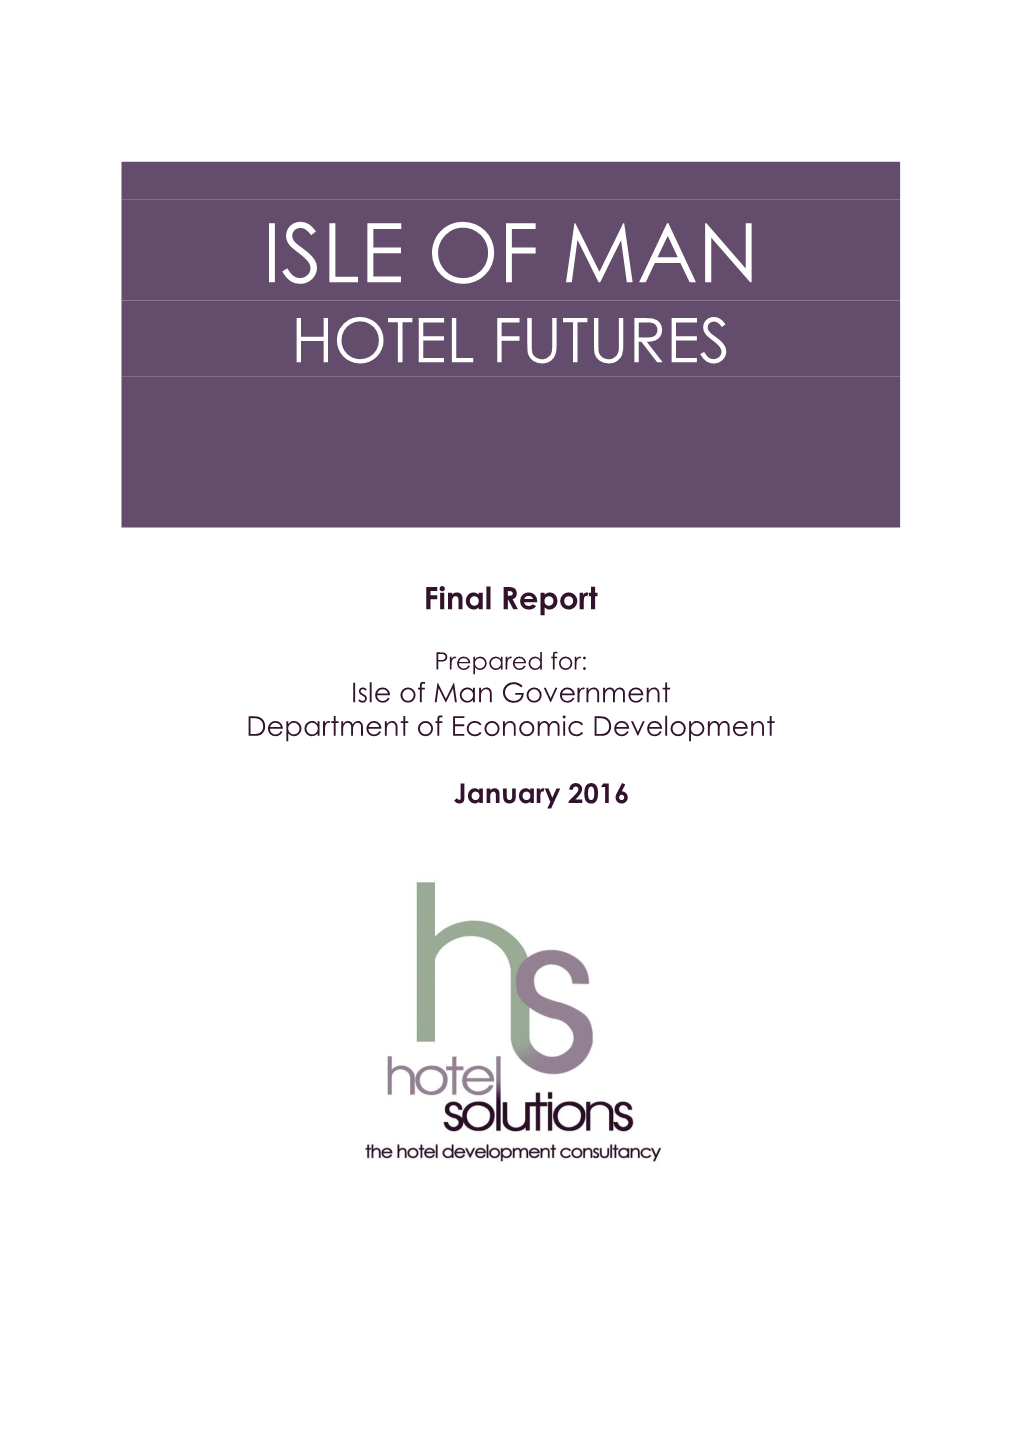 Isle of Man Hotel Futures Study